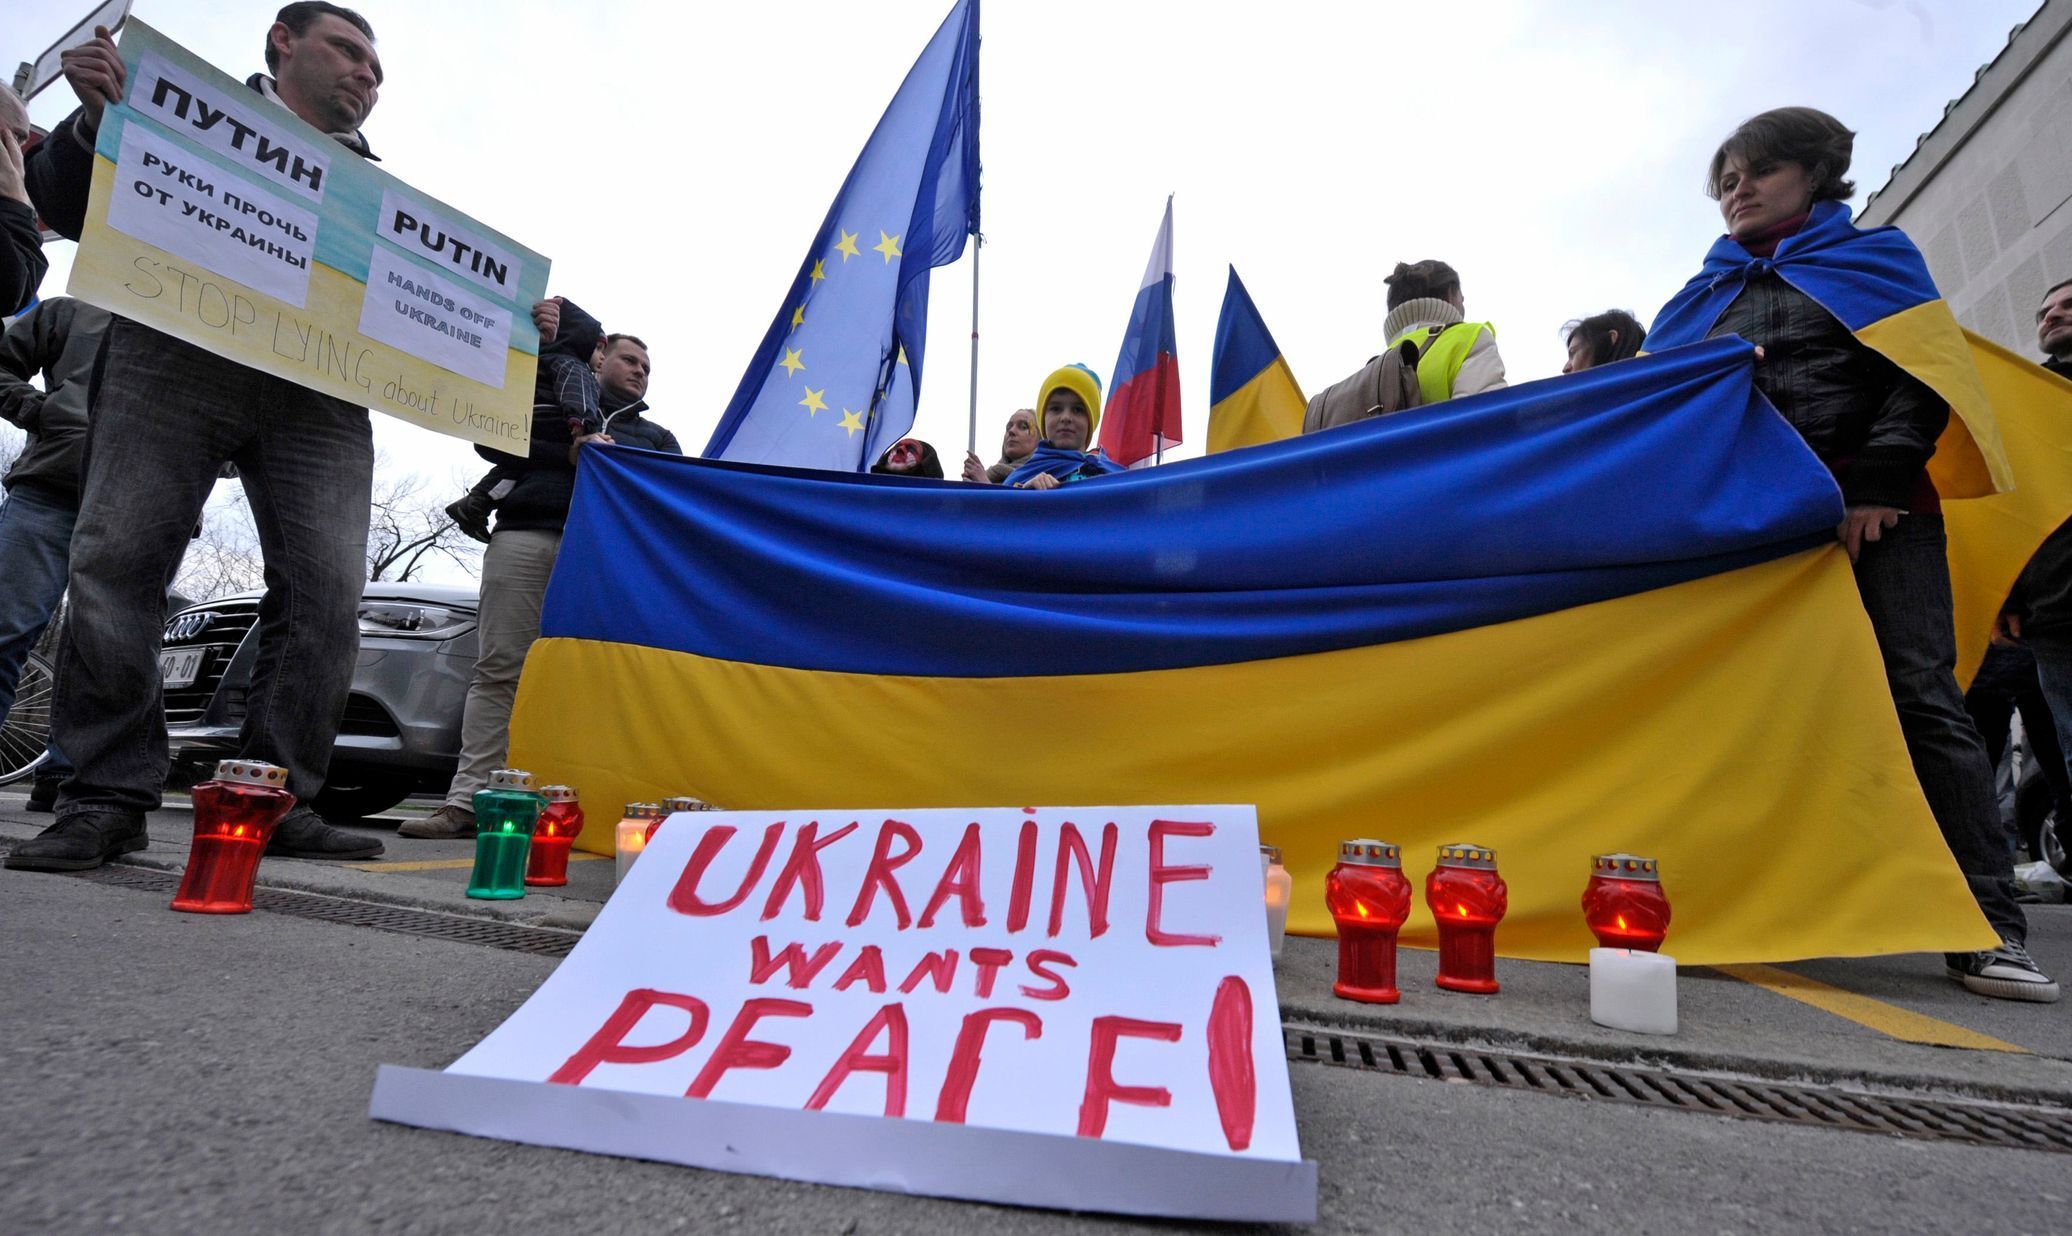 Ukrajina - Krym - Slovinsko - protesty ukrajinské komunity 5. 3. 2014